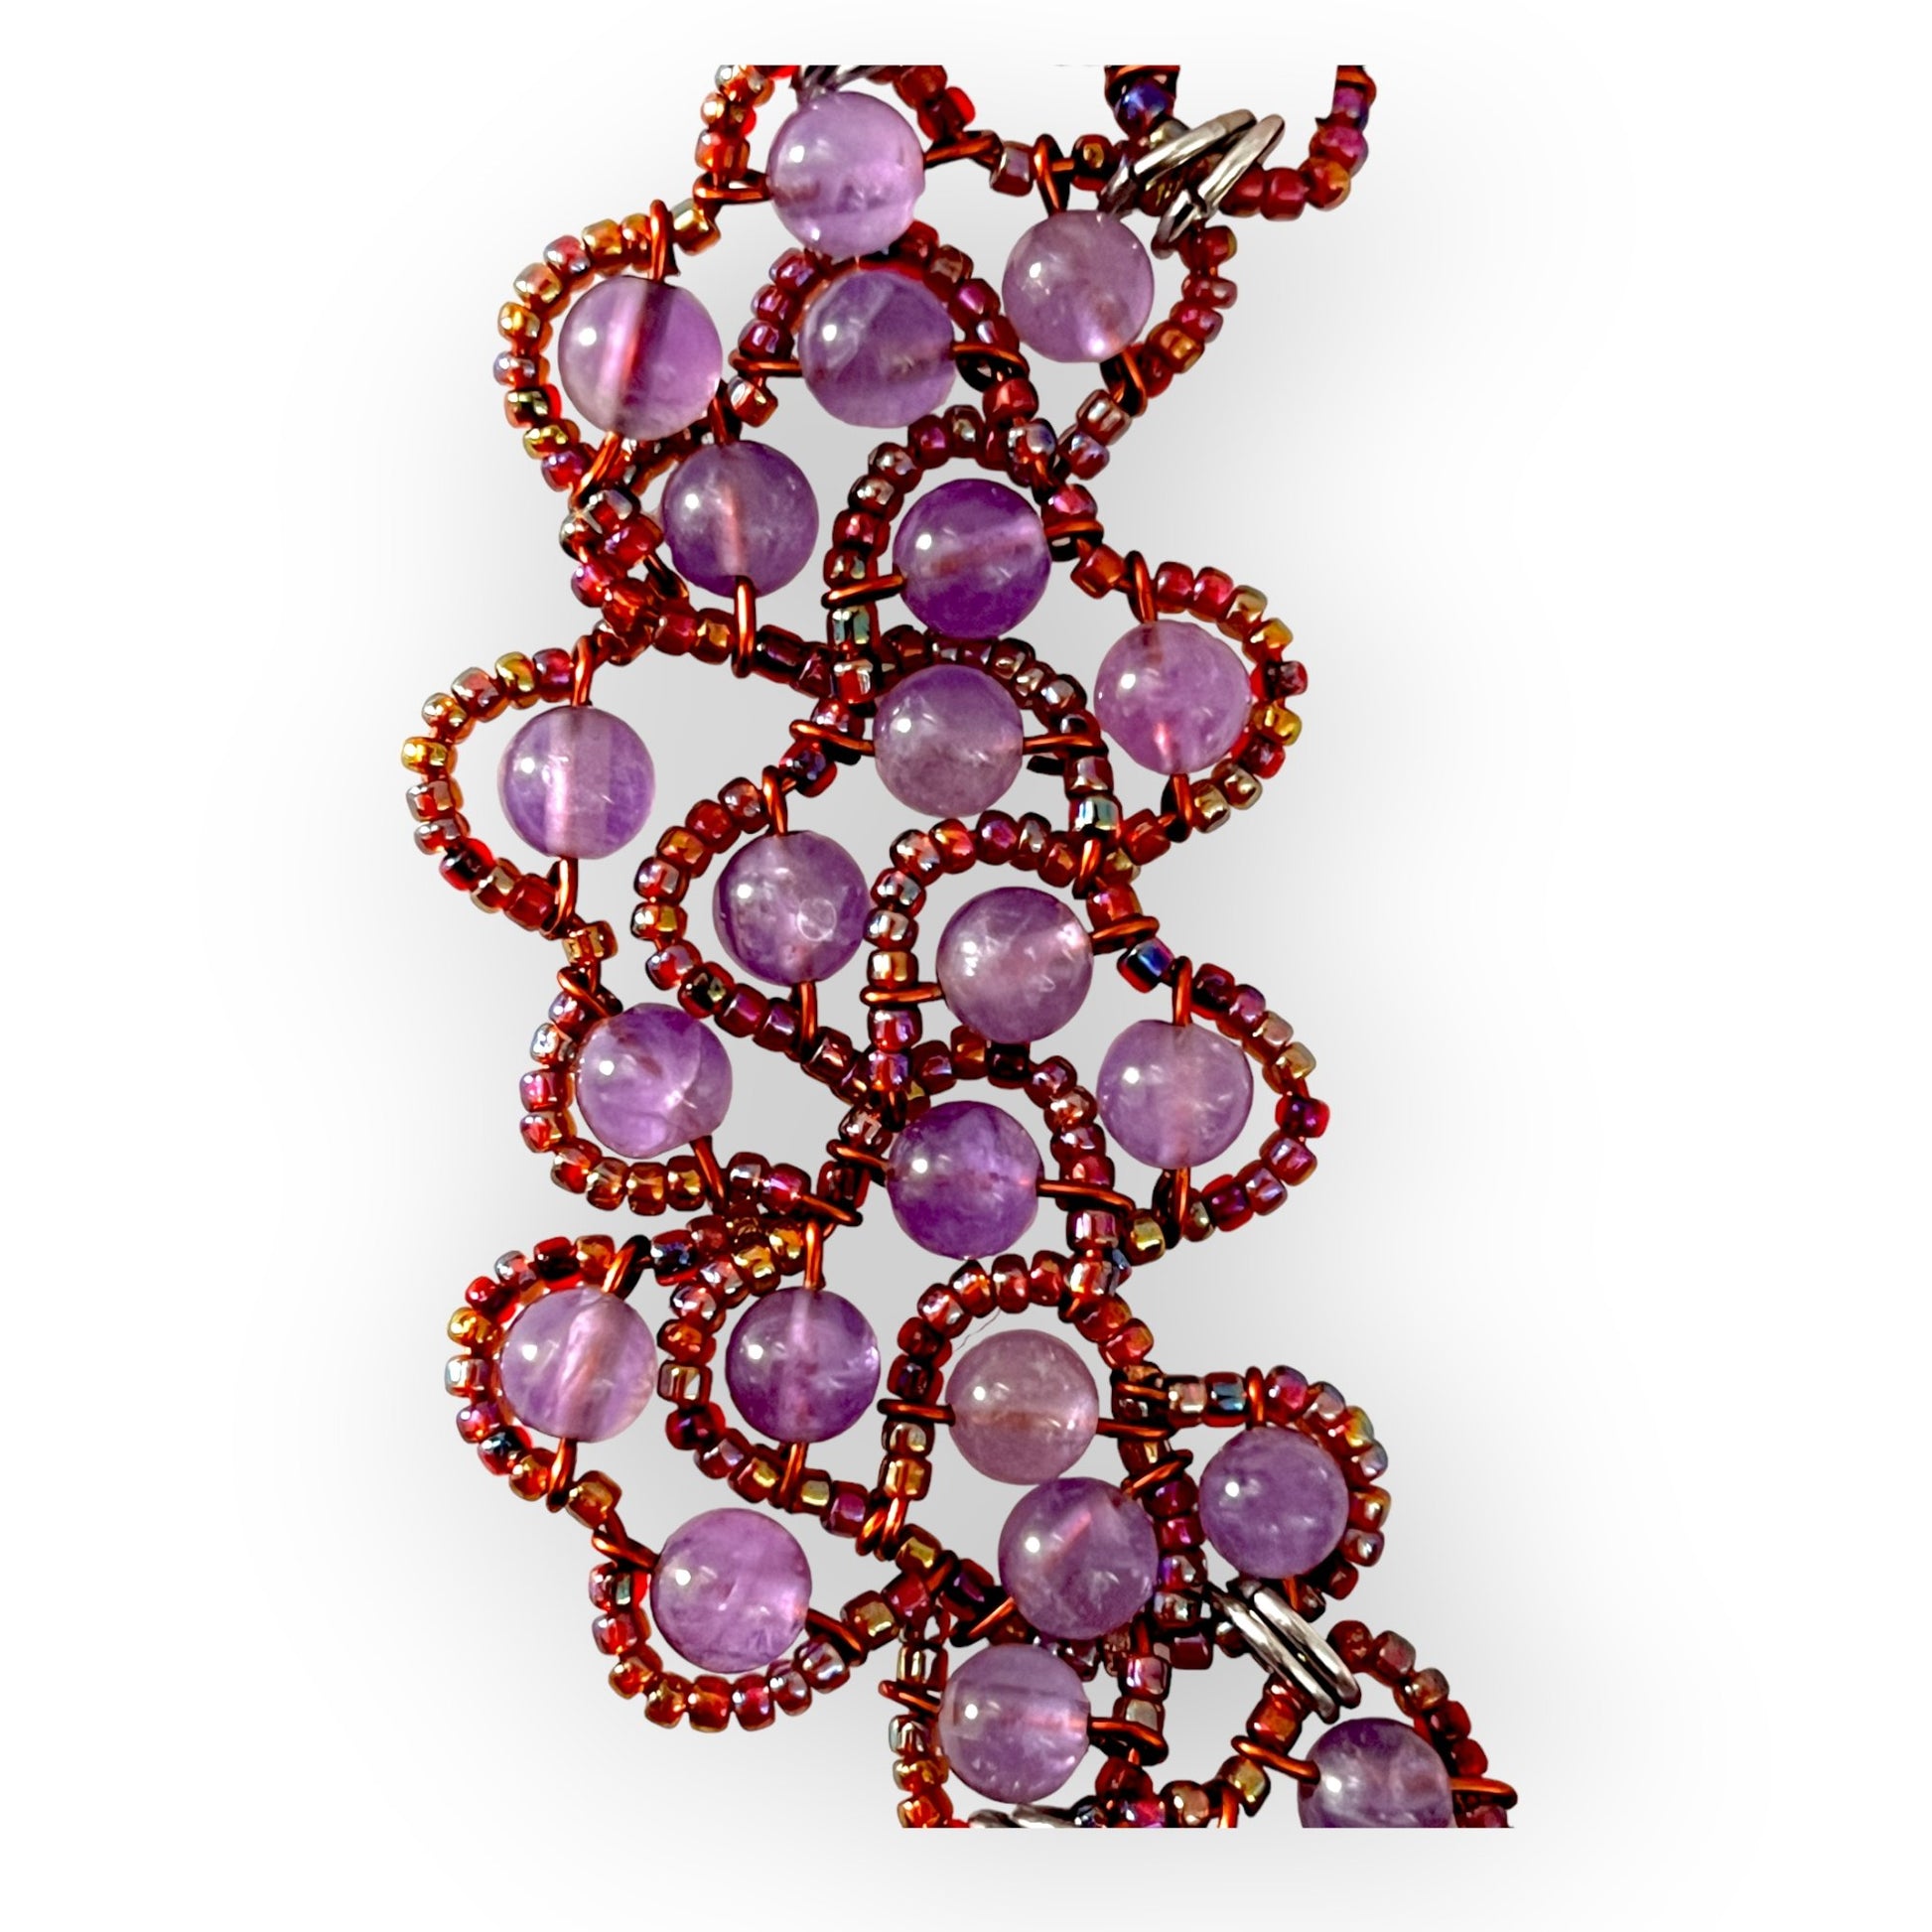 Pink quartz and purple amethyst choker length necklace - Sundara Joon